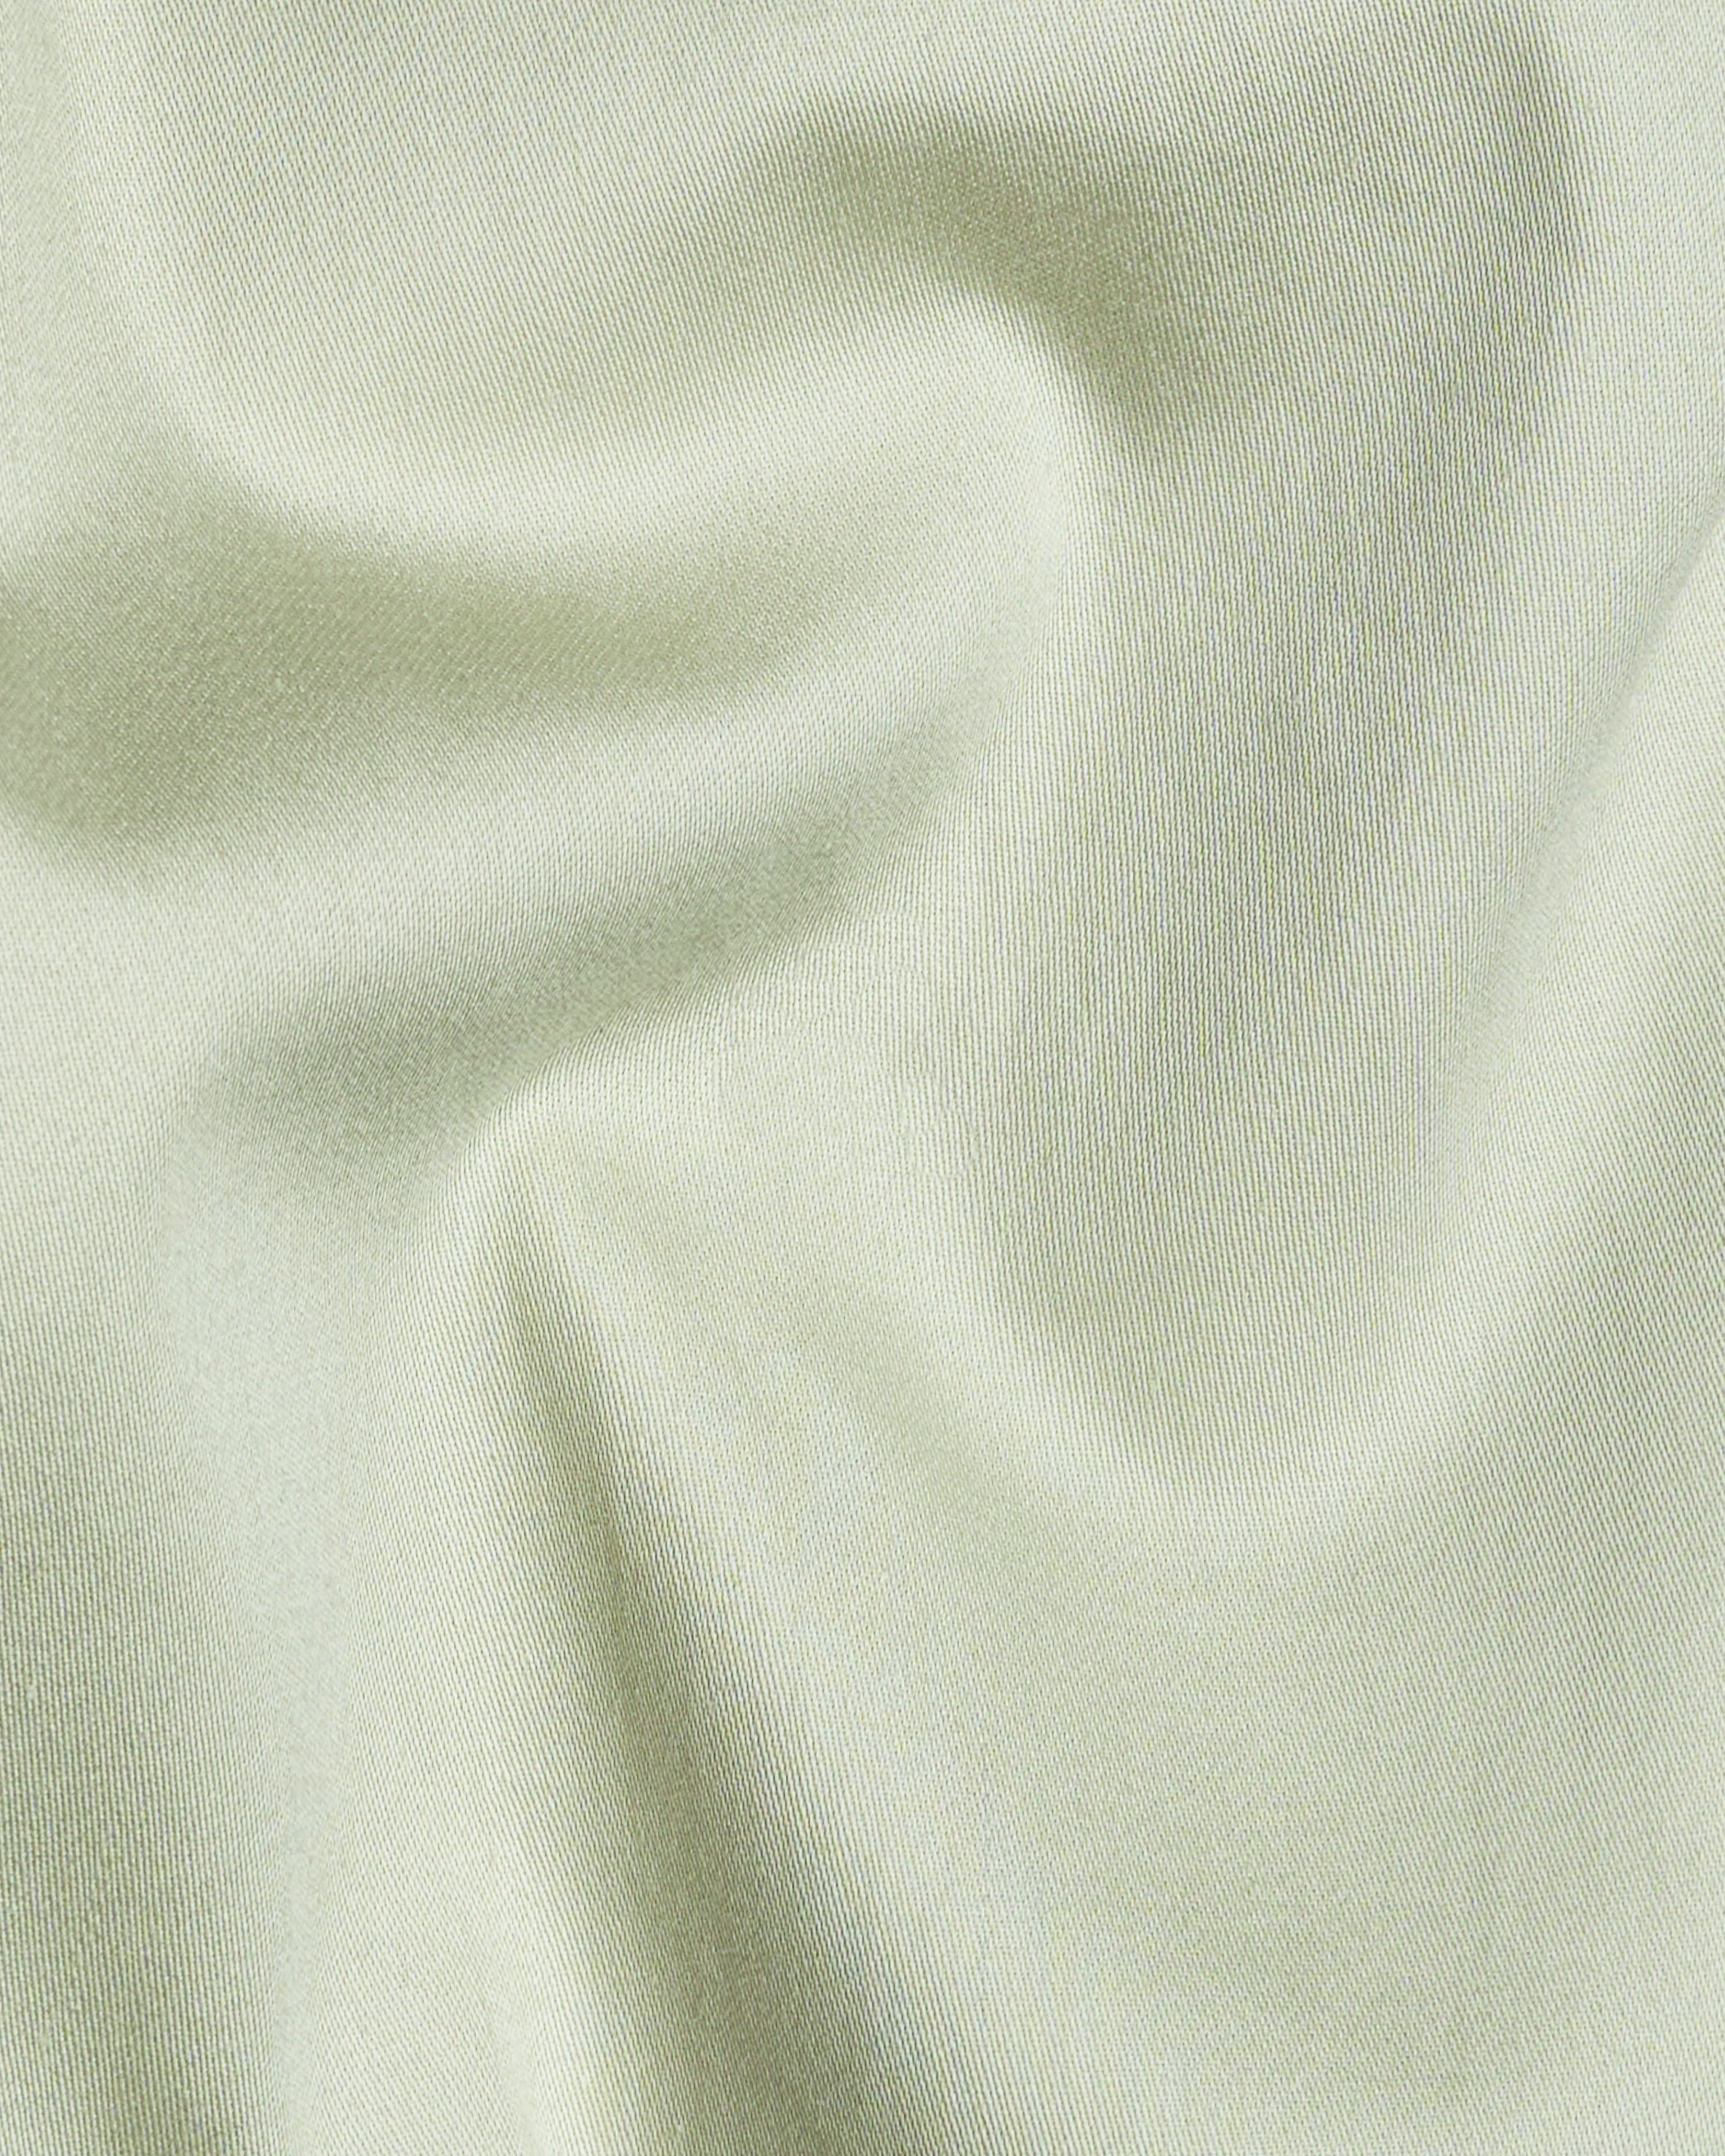 Coriander Green Snake Pleated Super Soft Premium Cotton Tuxedo Shirt 8874-BLK-TXD-38, 8874-BLK-TXD-H-38,  8874-BLK-TXD-39,  8874-BLK-TXD-H-39,  8874-BLK-TXD-40,  8874-BLK-TXD-H-40,  8874-BLK-TXD-42,  8874-BLK-TXD-H-42,  8874-BLK-TXD-44,  8874-BLK-TXD-H-44,  8874-BLK-TXD-46,  8874-BLK-TXD-H-46,  8874-BLK-TXD-48,  8874-BLK-TXD-H-48,  8874-BLK-TXD-50,  8874-BLK-TXD-H-50,  8874-BLK-TXD-52,  8874-BLK-TXD-H-52